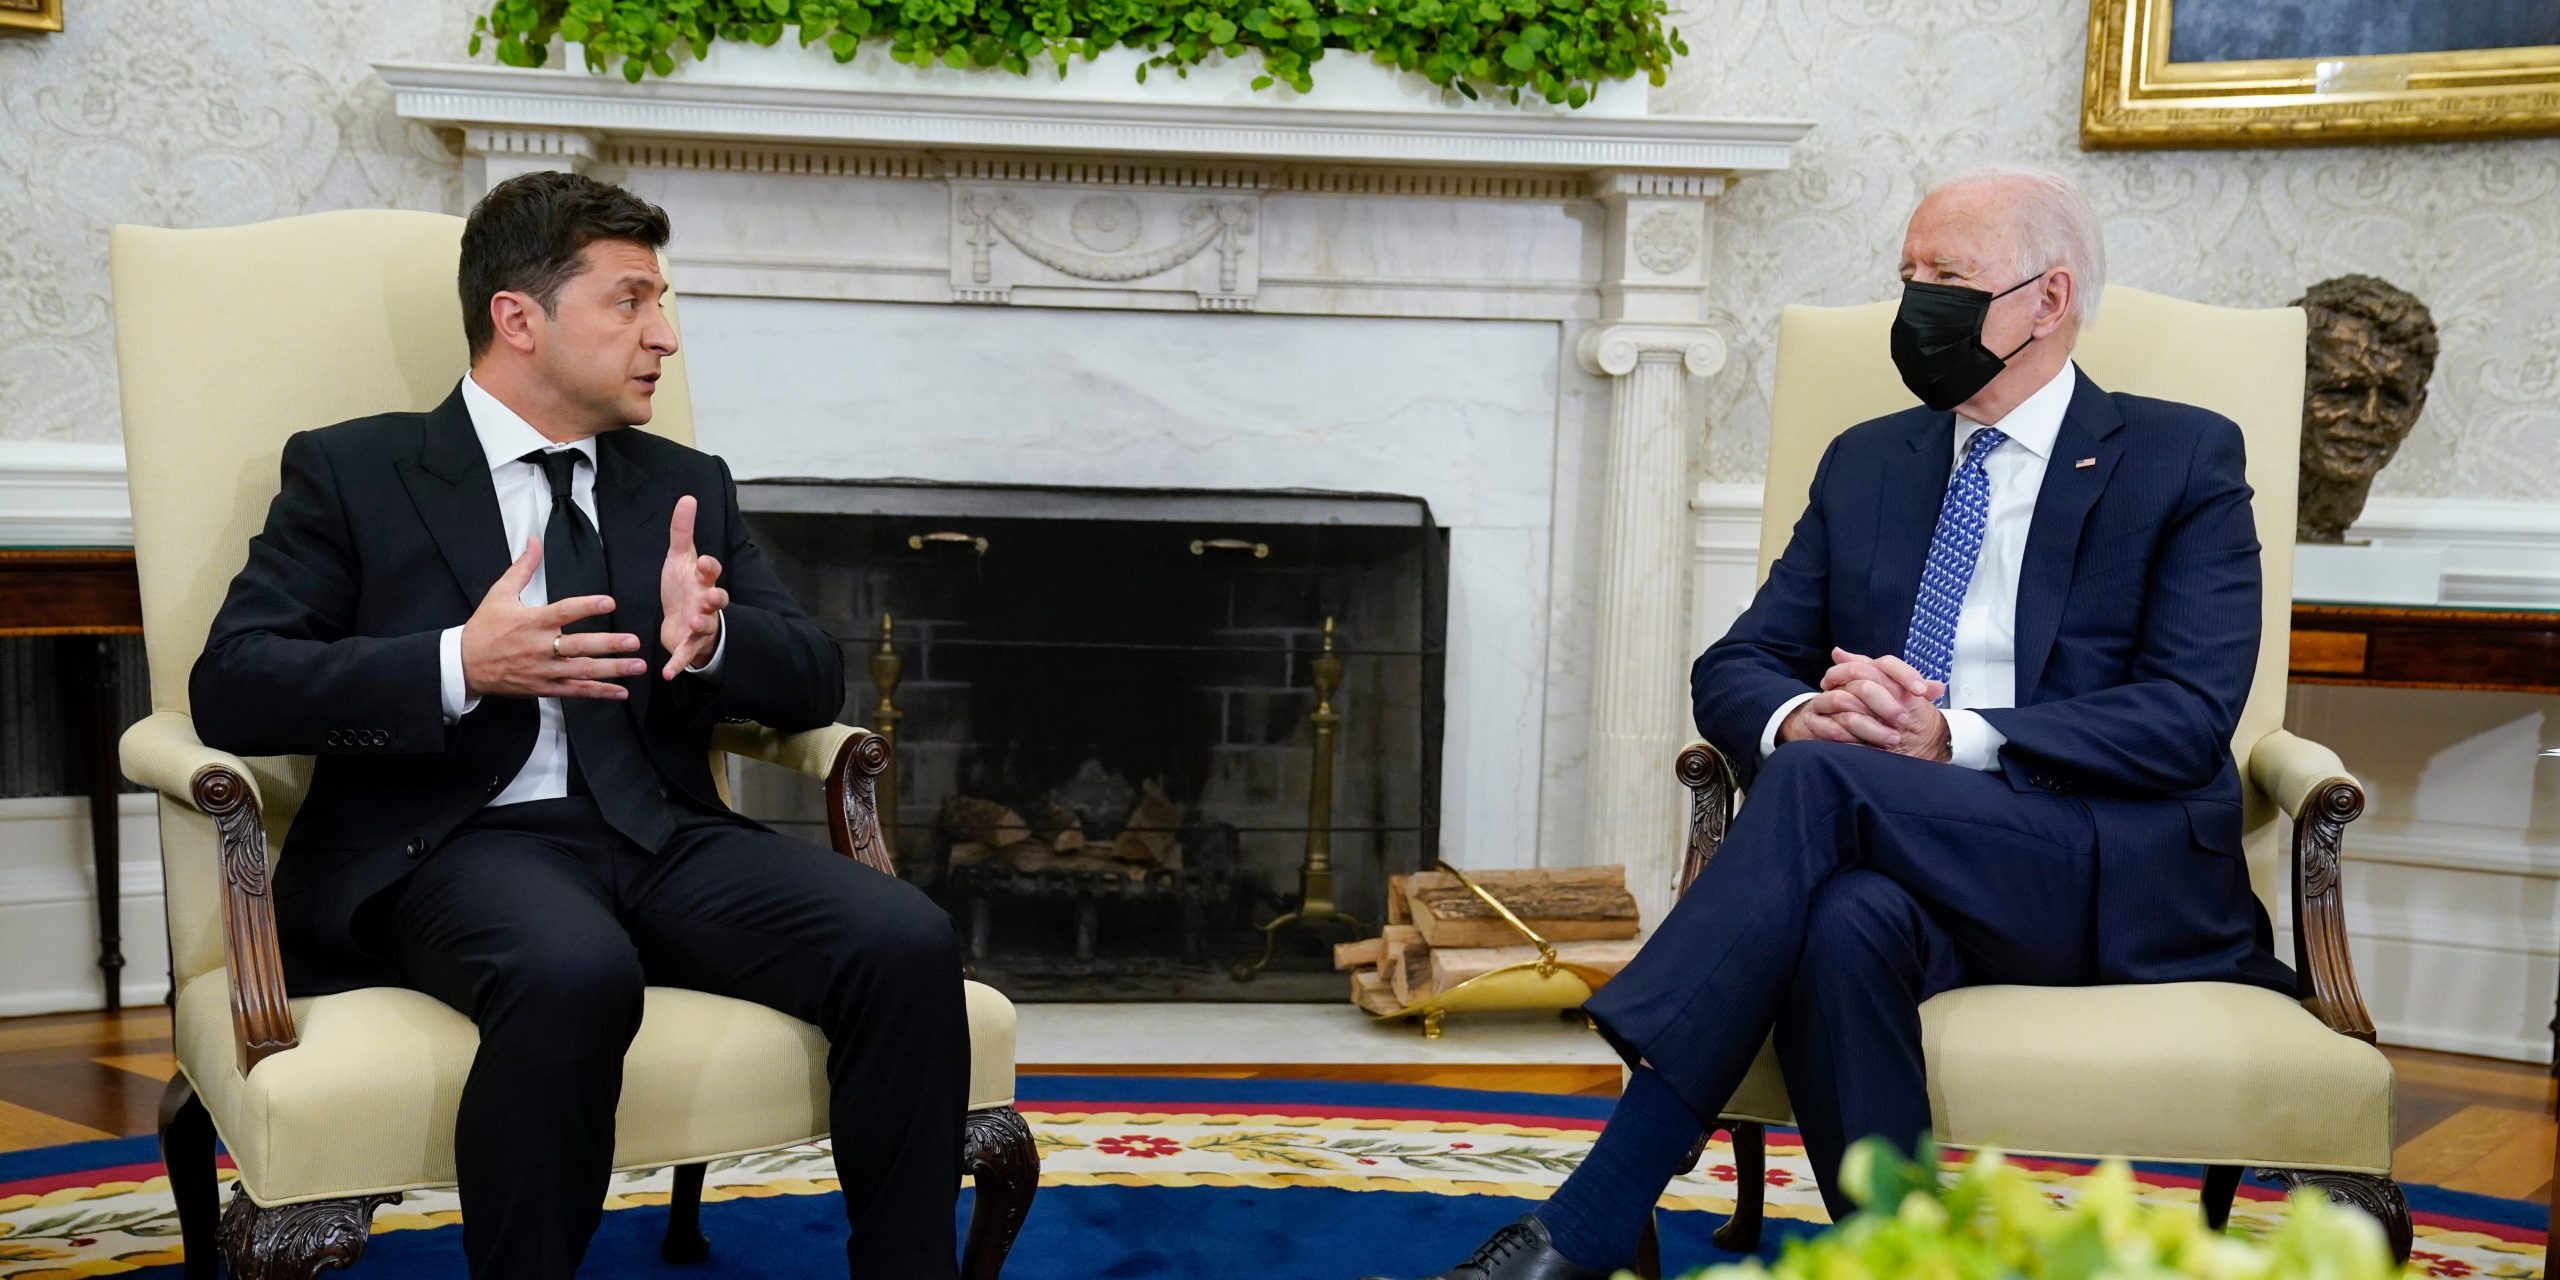 US President Joe Biden meets with Ukrainian President Volodymyr Zelensky in the Oval Office on September 1, 2021